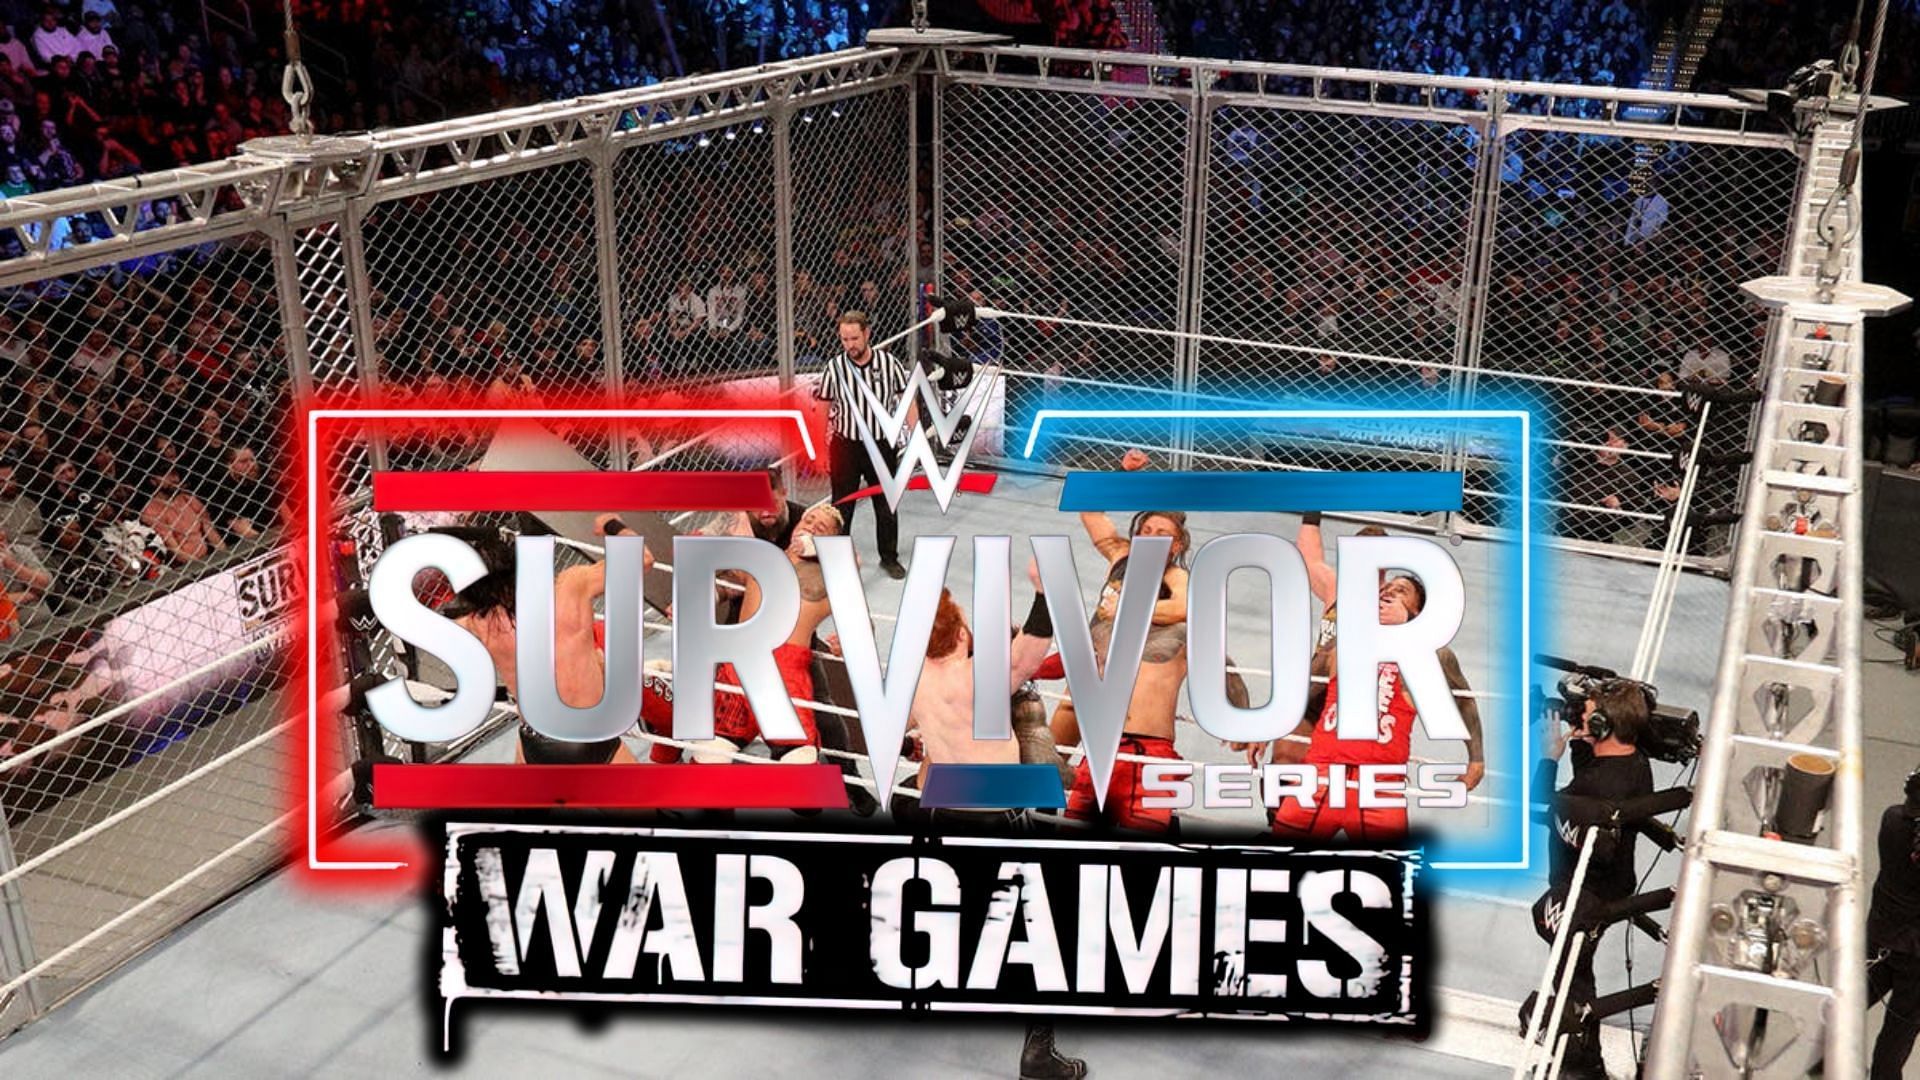 Survivor Series WarGames was a huge hit with WWE fans